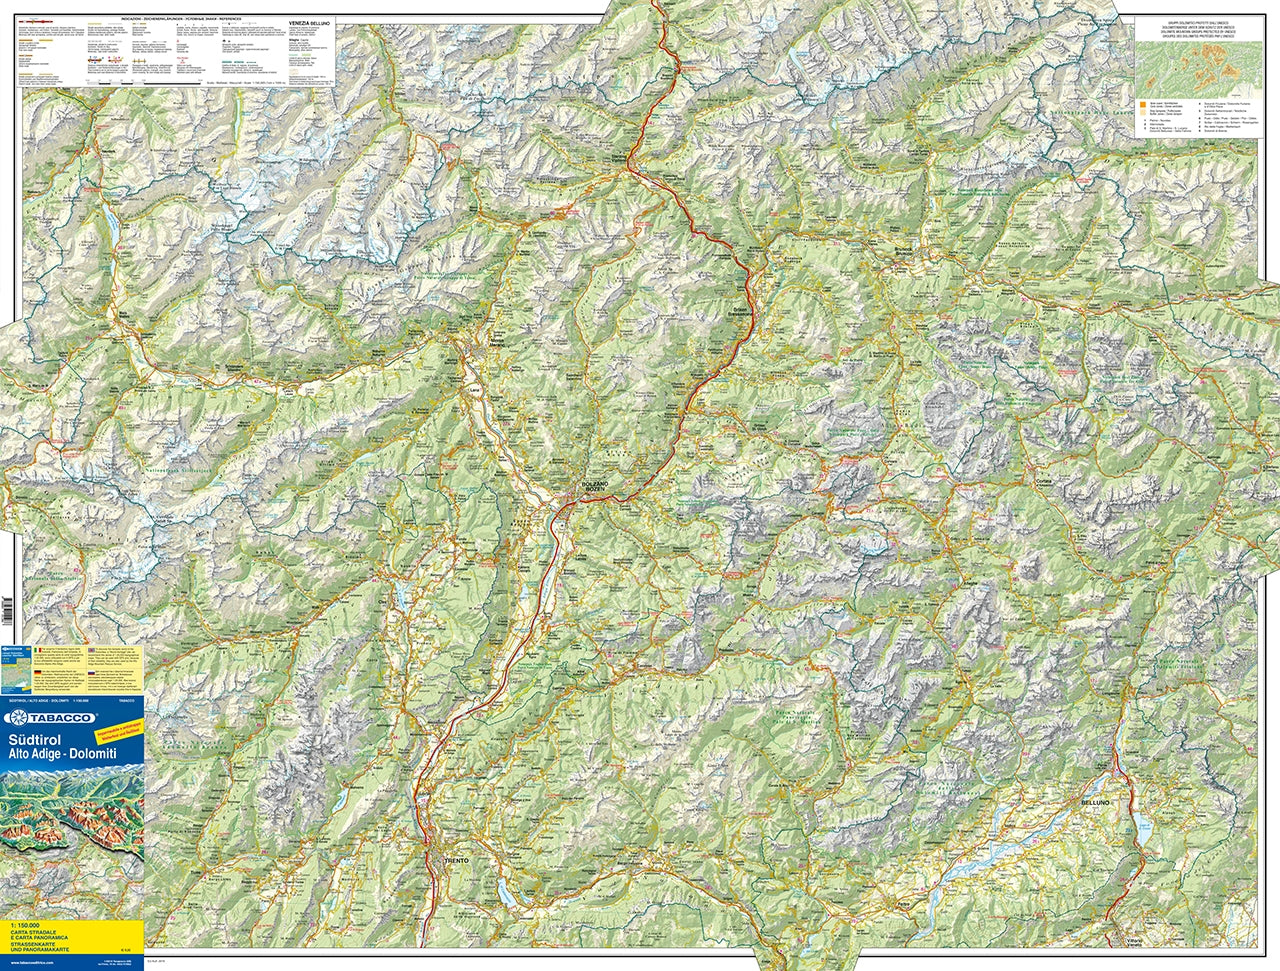 Road map South Tyrol / Alto Adige - Dolomiti road map 1:150,000